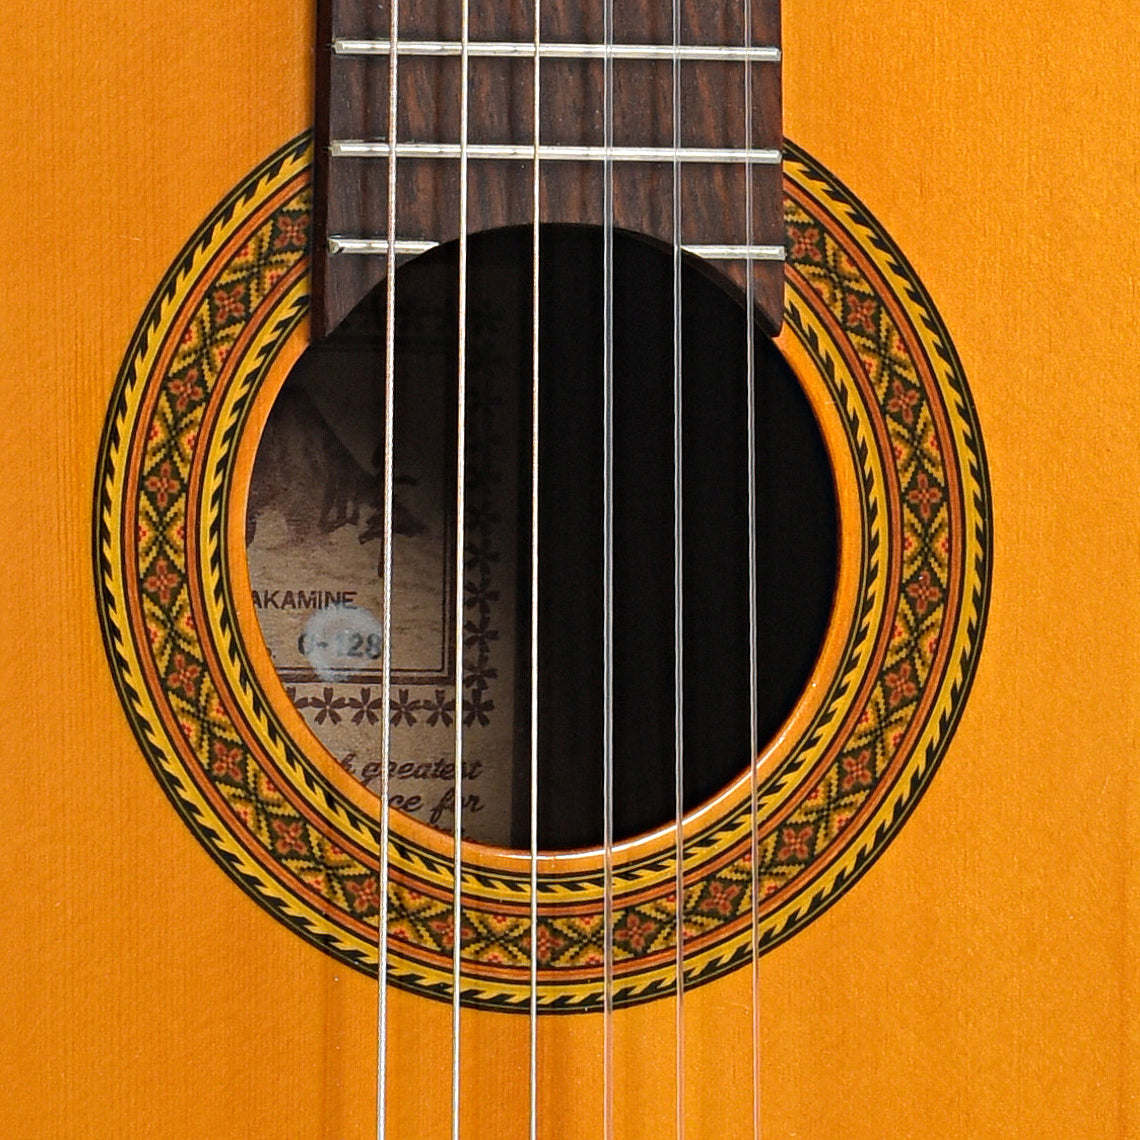 Sound hole of Takamine C-128 Classical Guitar (1978)